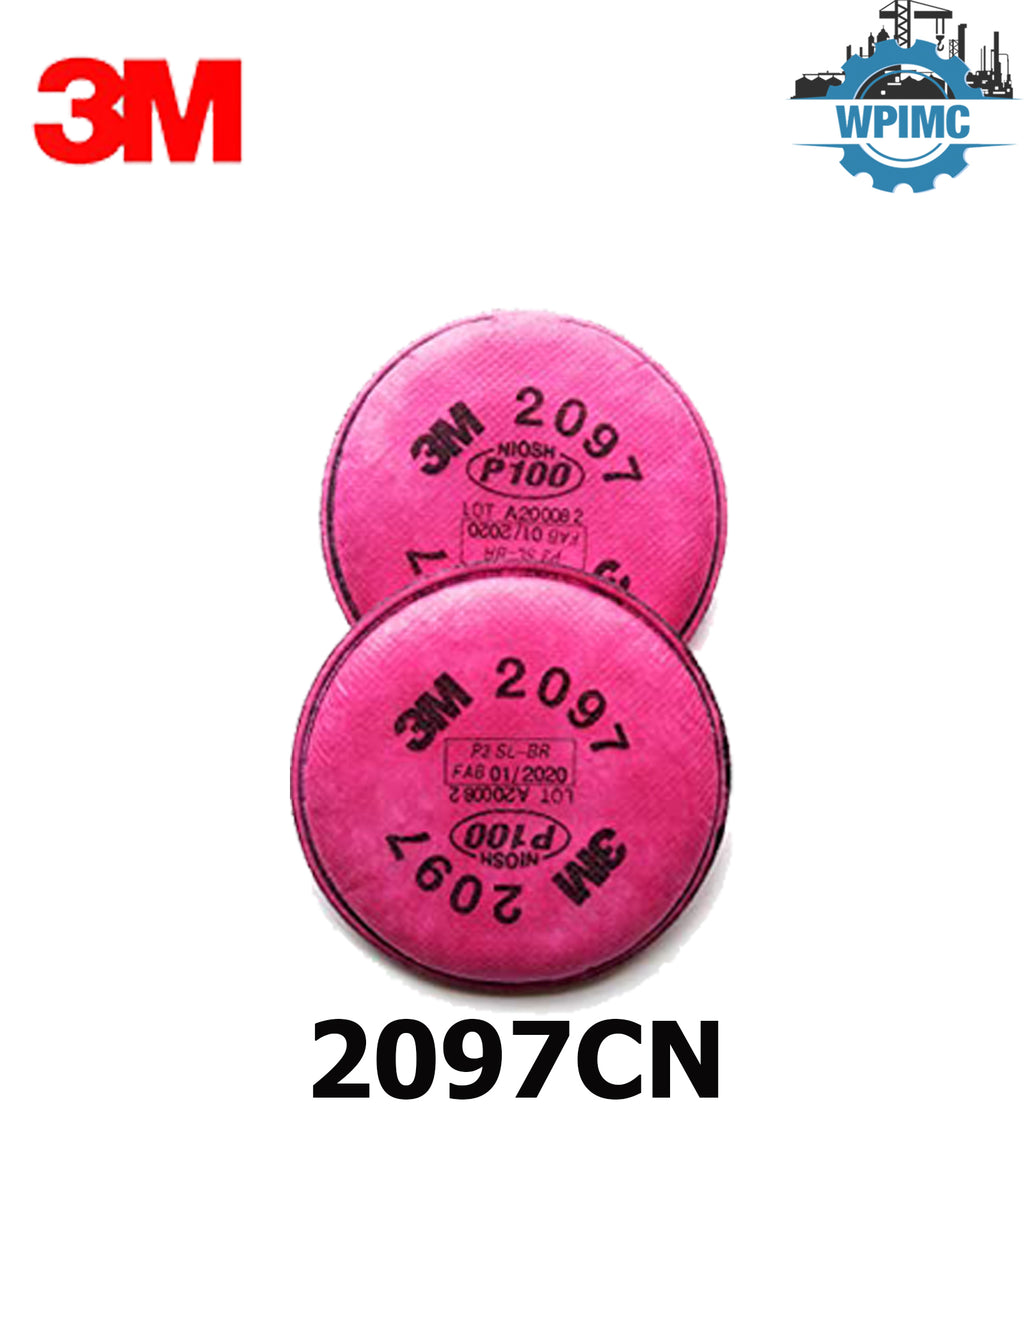 3M 2097CN Cartridge